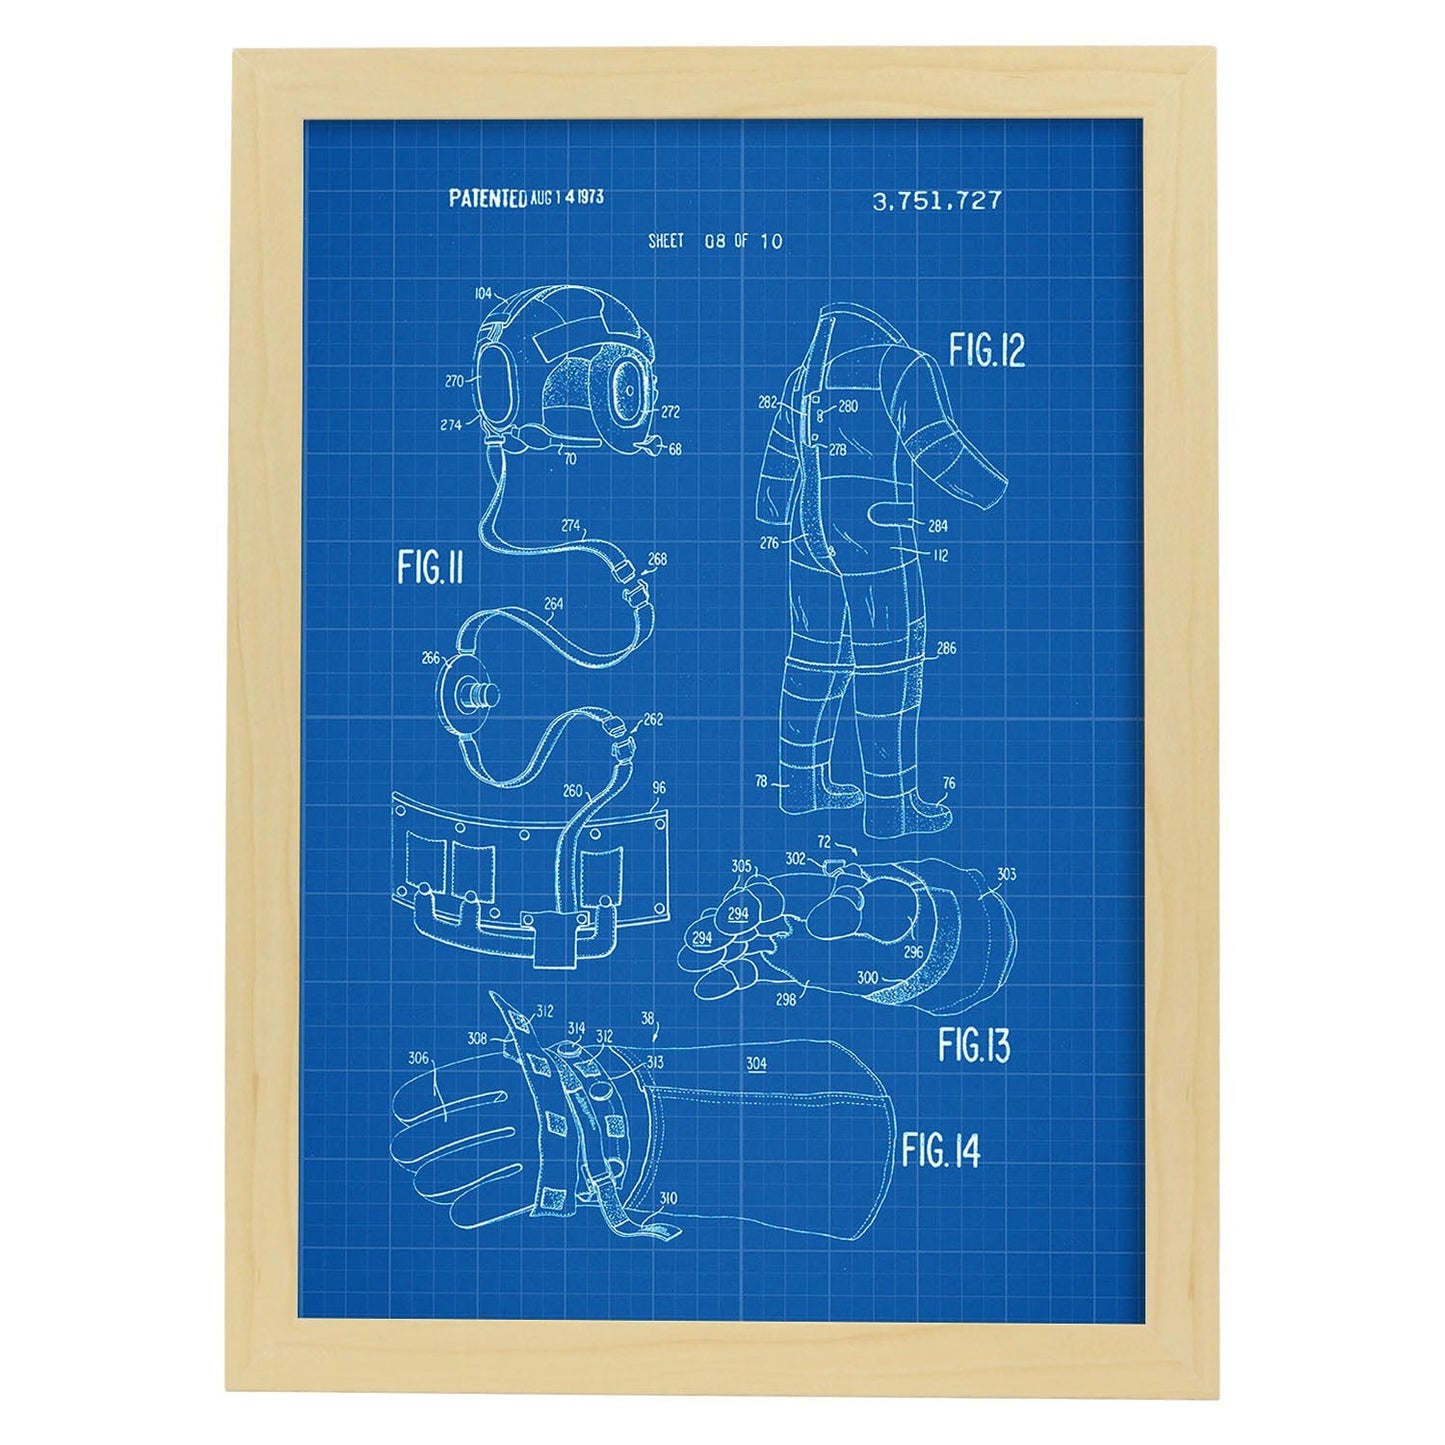 Poster con patente de Ropa astronauta 2. Lámina con diseño de patente antigua-Artwork-Nacnic-A4-Marco Madera clara-Nacnic Estudio SL